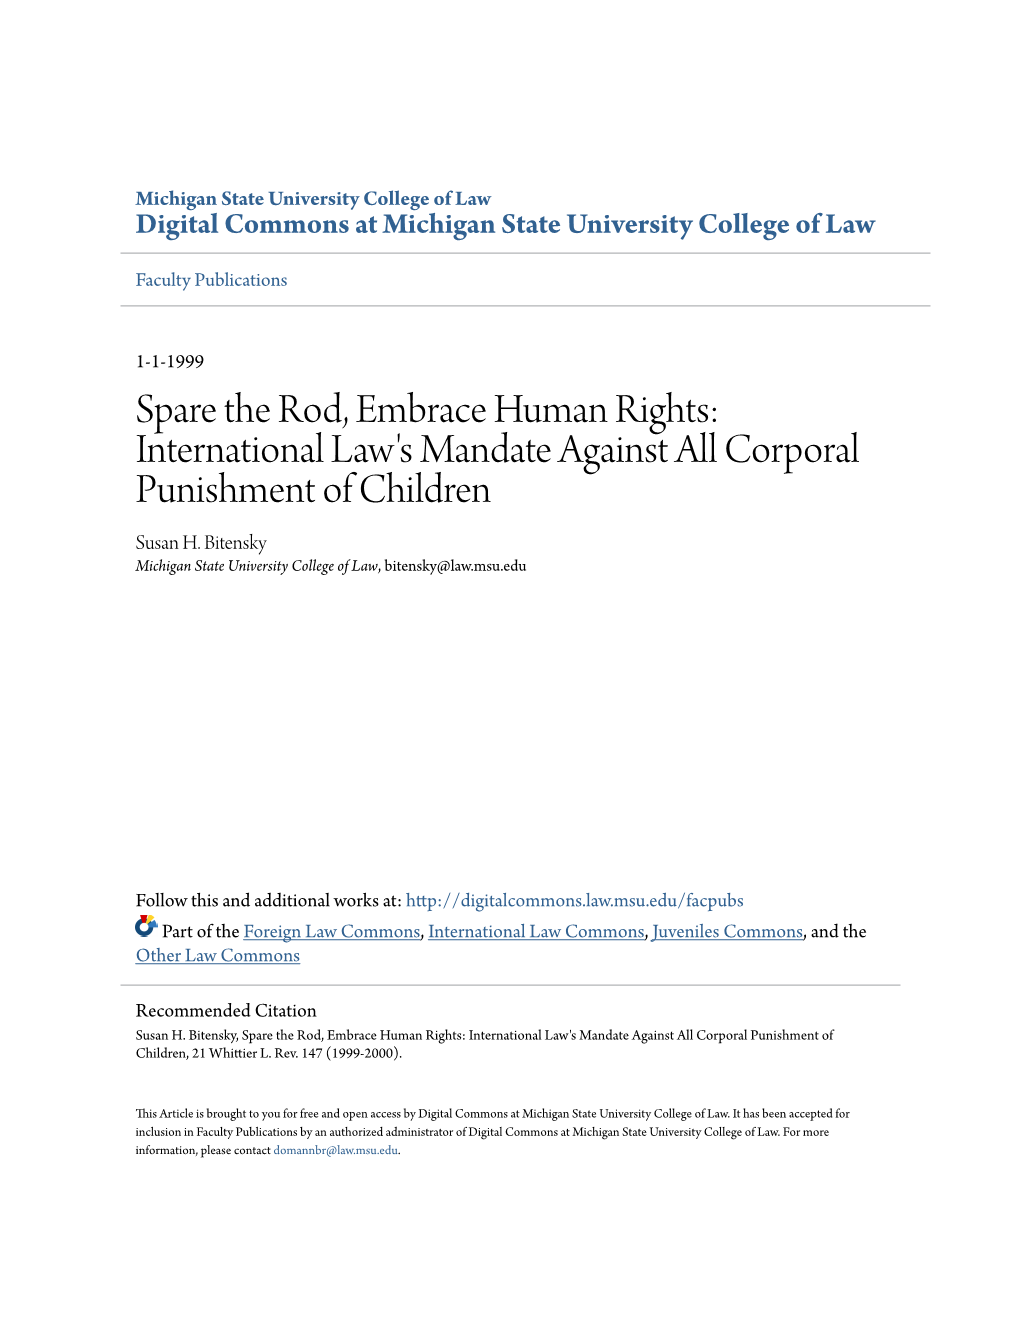 International Law's Mandate Against All Corporal Punishment of Children Susan H